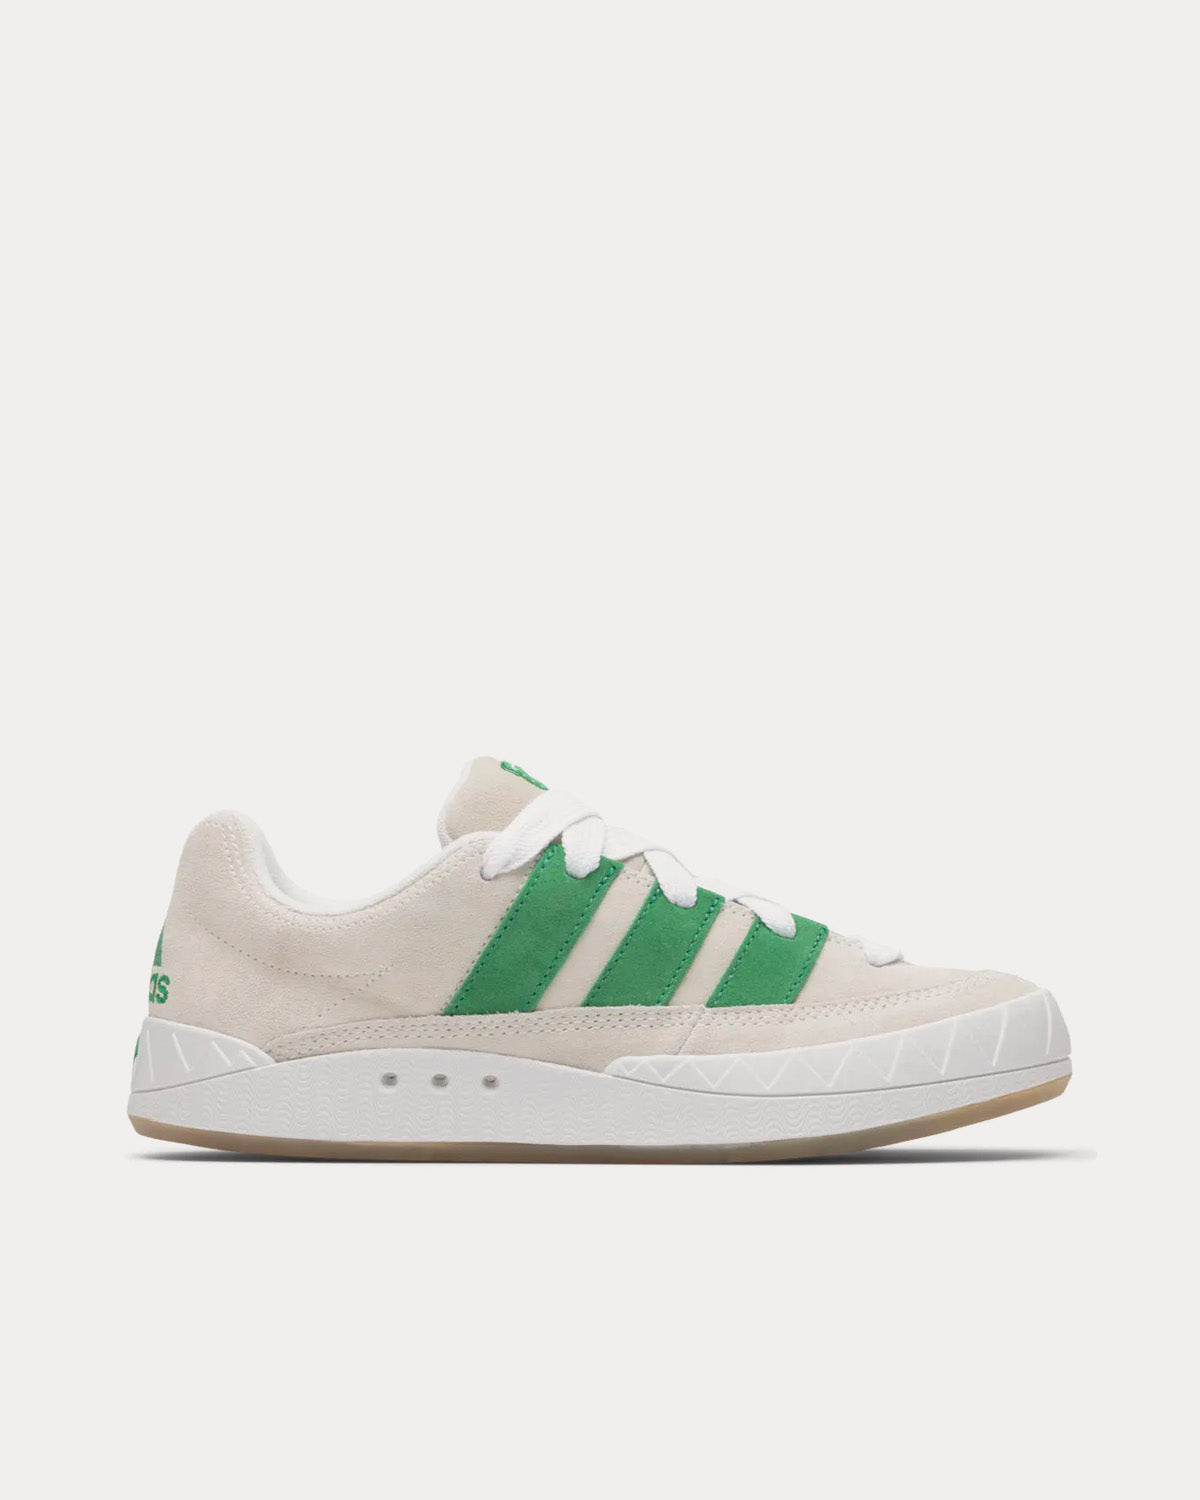 Adidas x Beams - x Bodega Adimatic Off-White / Green Low Top Sneakers